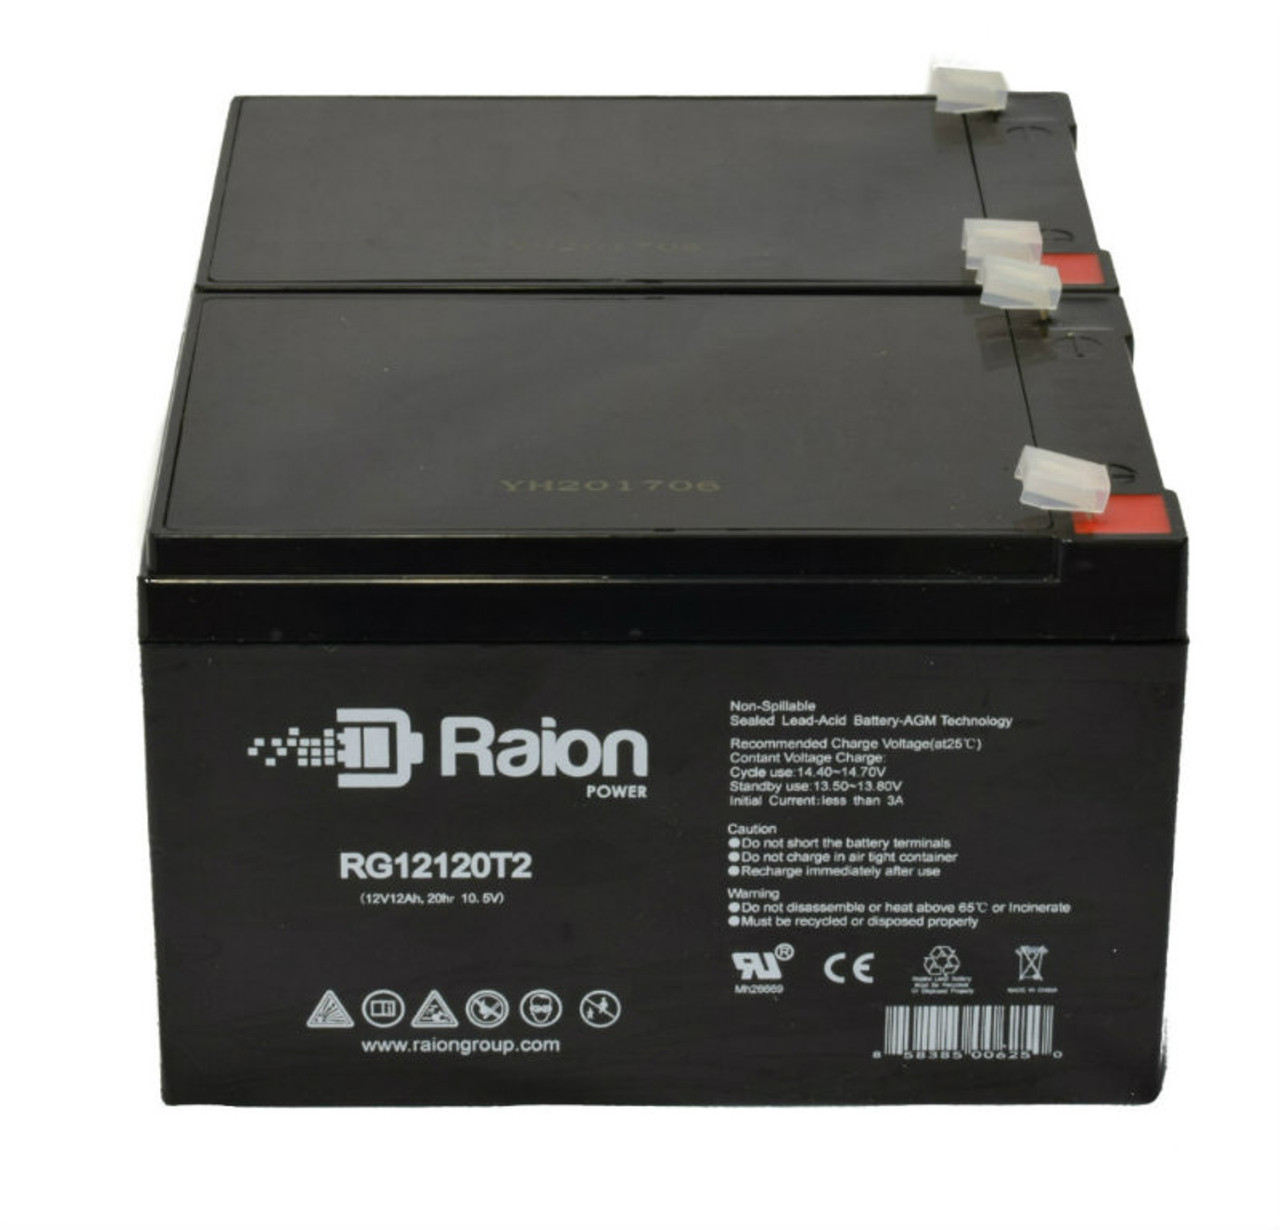 Raion Power 12V 12Ah Non-Spillable Compatible Replacement Battery for eZip E-750 - (2 Pack)